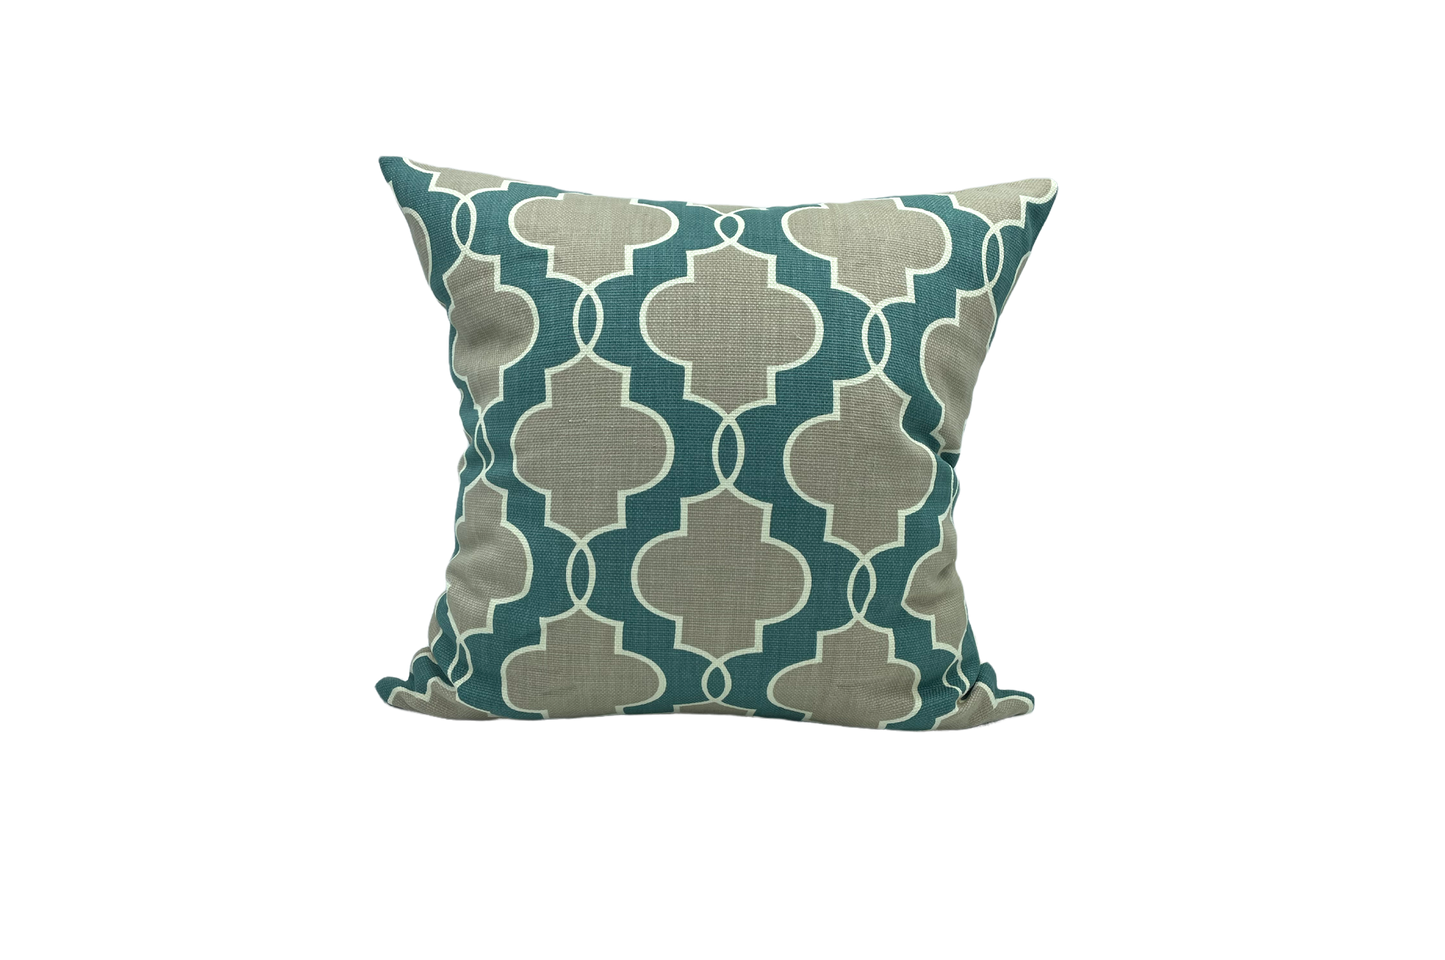 Blue Mosaic - Sustainable Décor Pillows